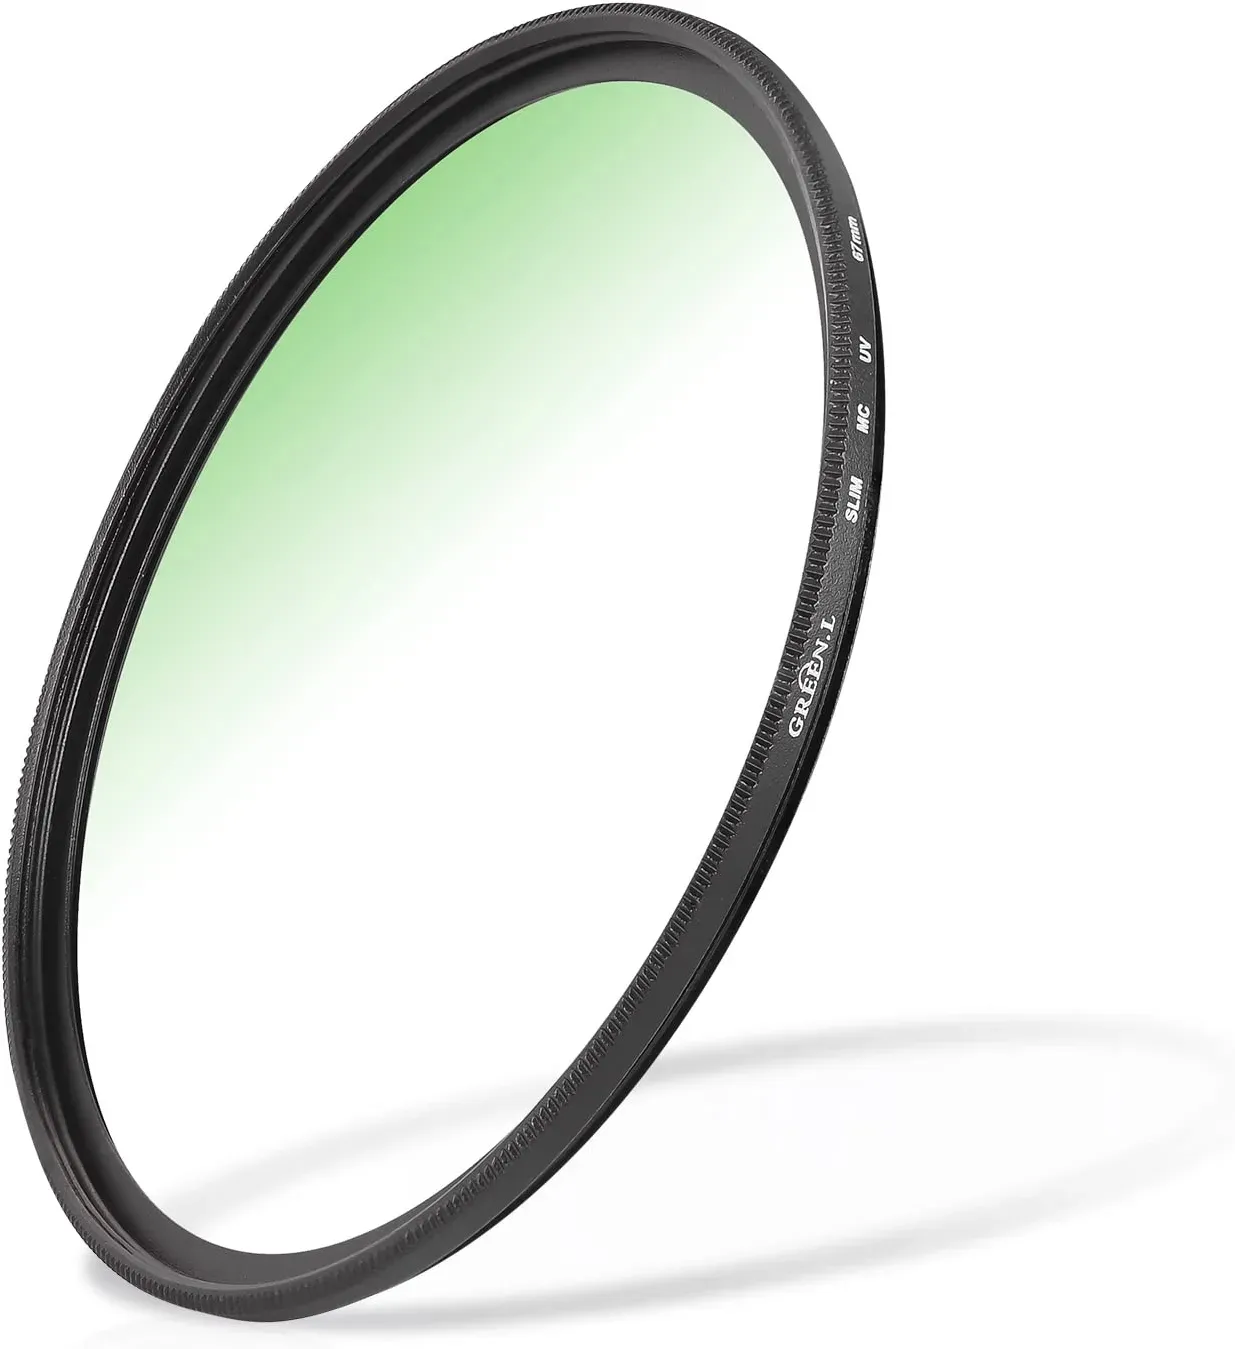 Filtro de lente protetor multirrevestido UV, compatível com Canon, Nikon, Fuji, Sigma, Olympus, Panasonic, Tokina, Tamron